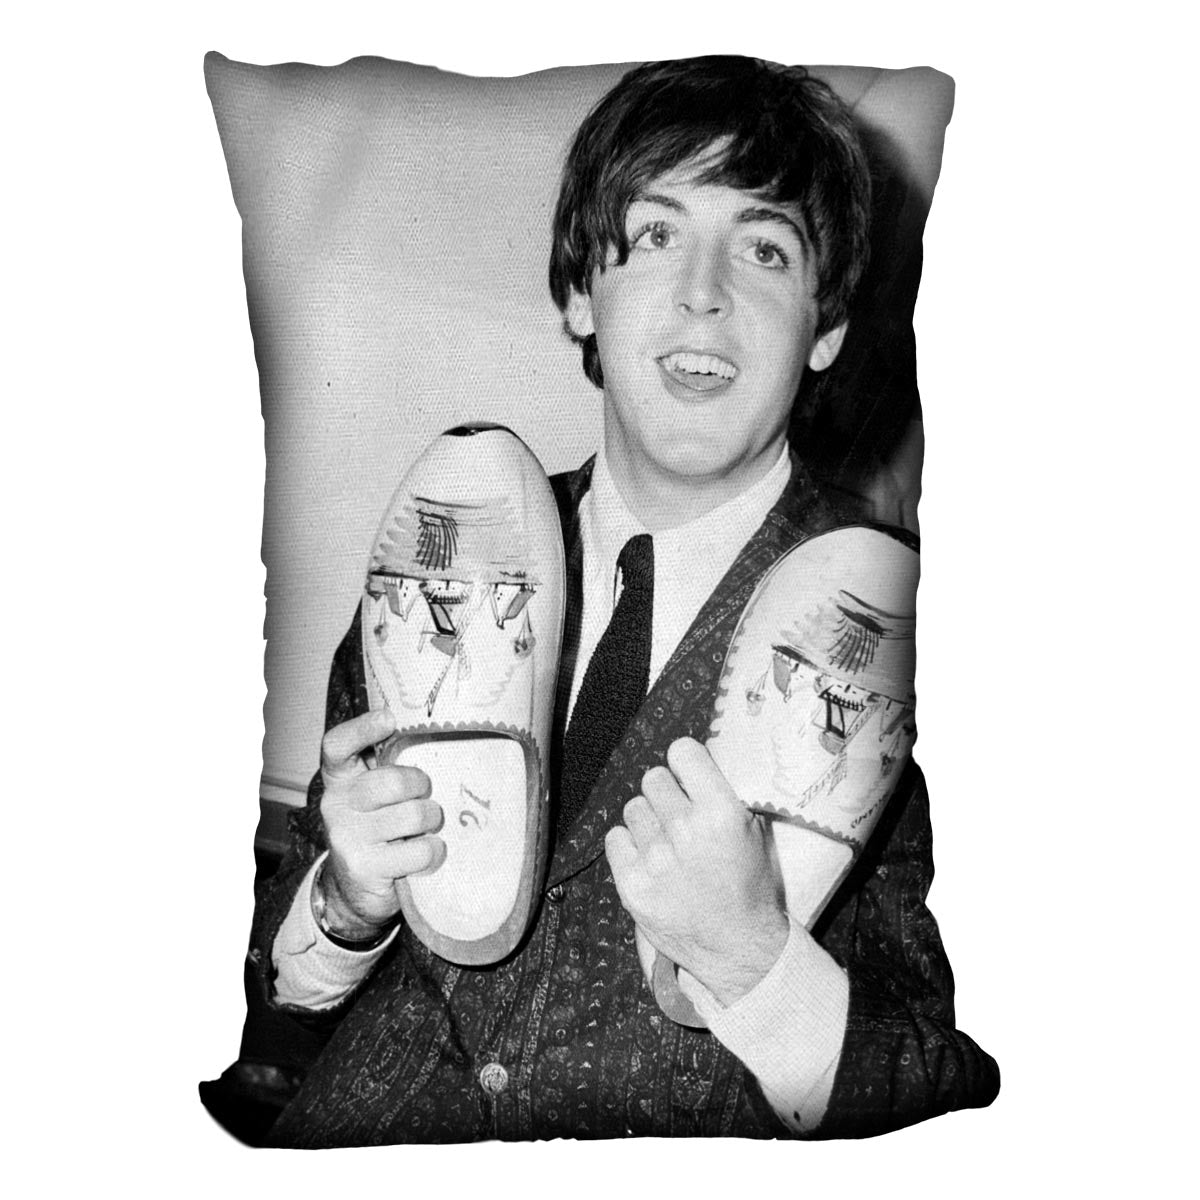 Paul McCartney with a pair of clogs Cushion